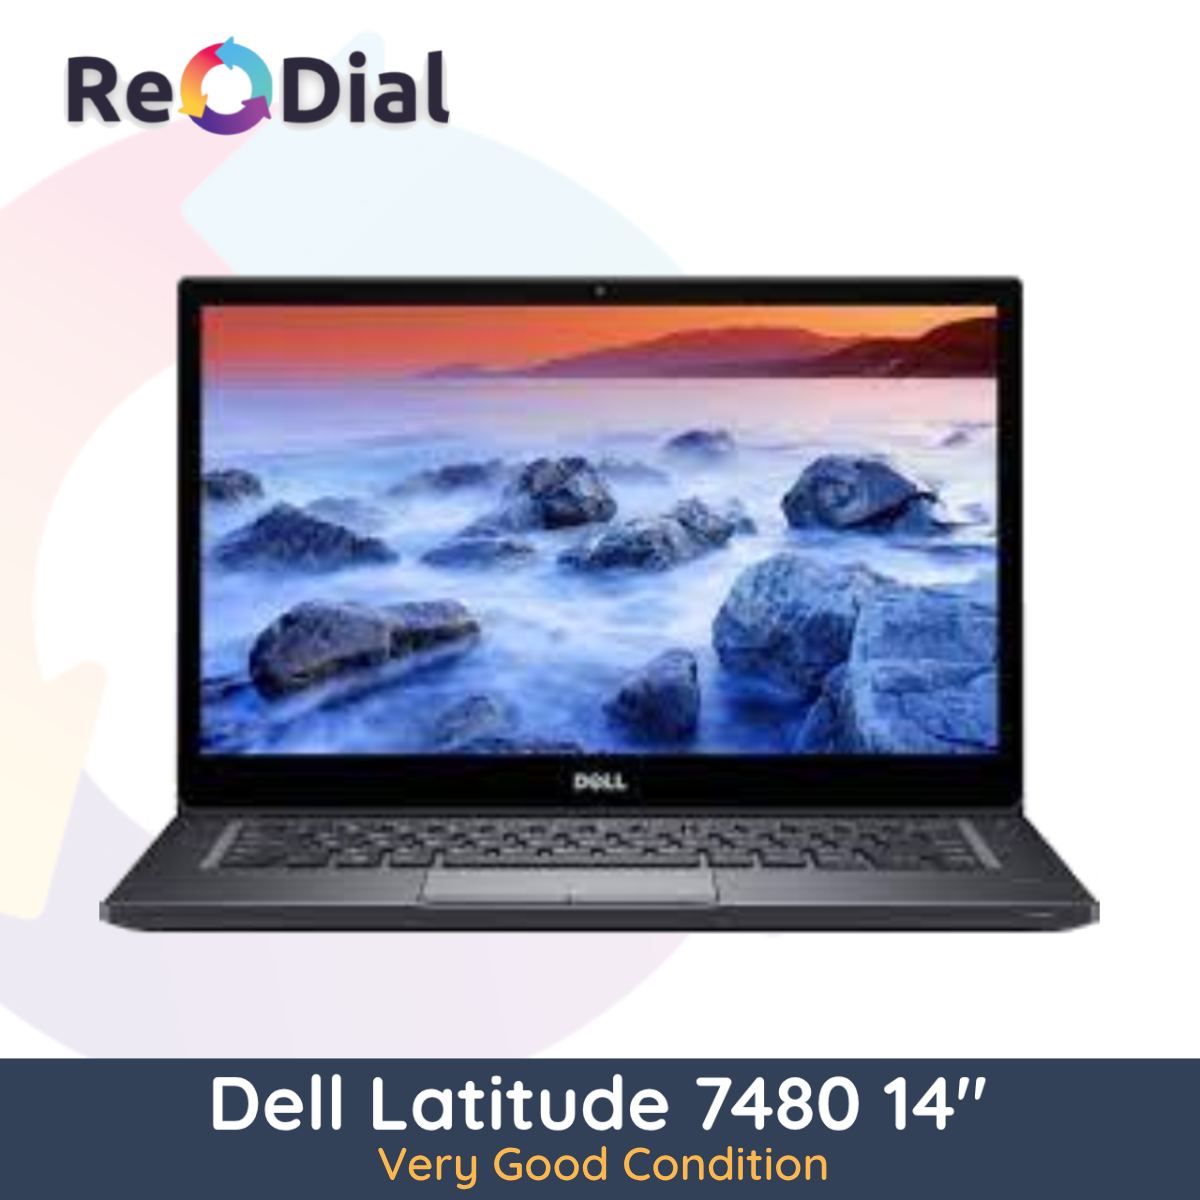 Dell Latitude 7480 14" Laptop i5-6360U 256GB 8GB RAM - Very Good Condition